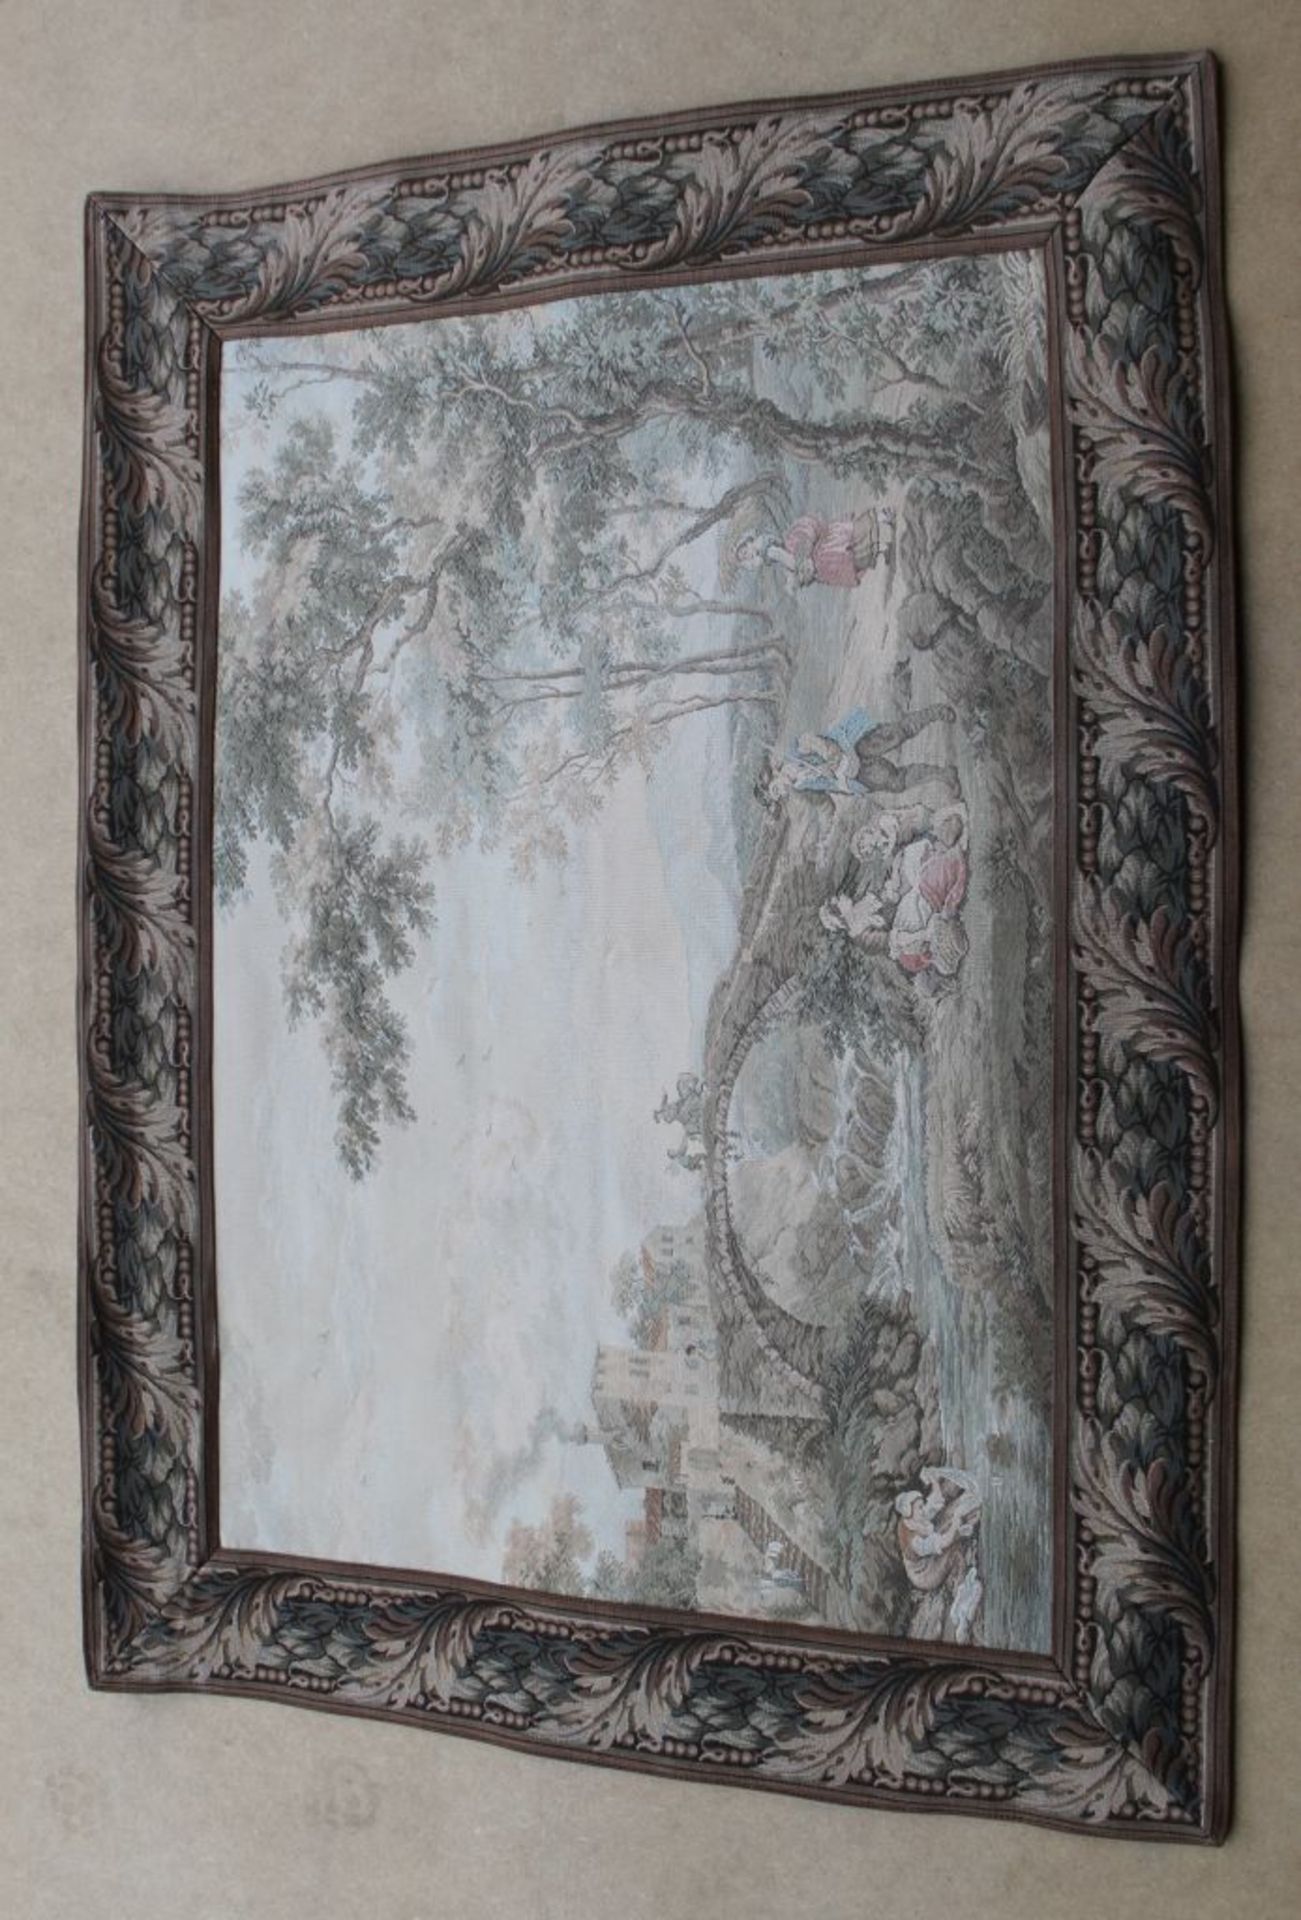 Wandbehang mit Darstellung,123x93cm